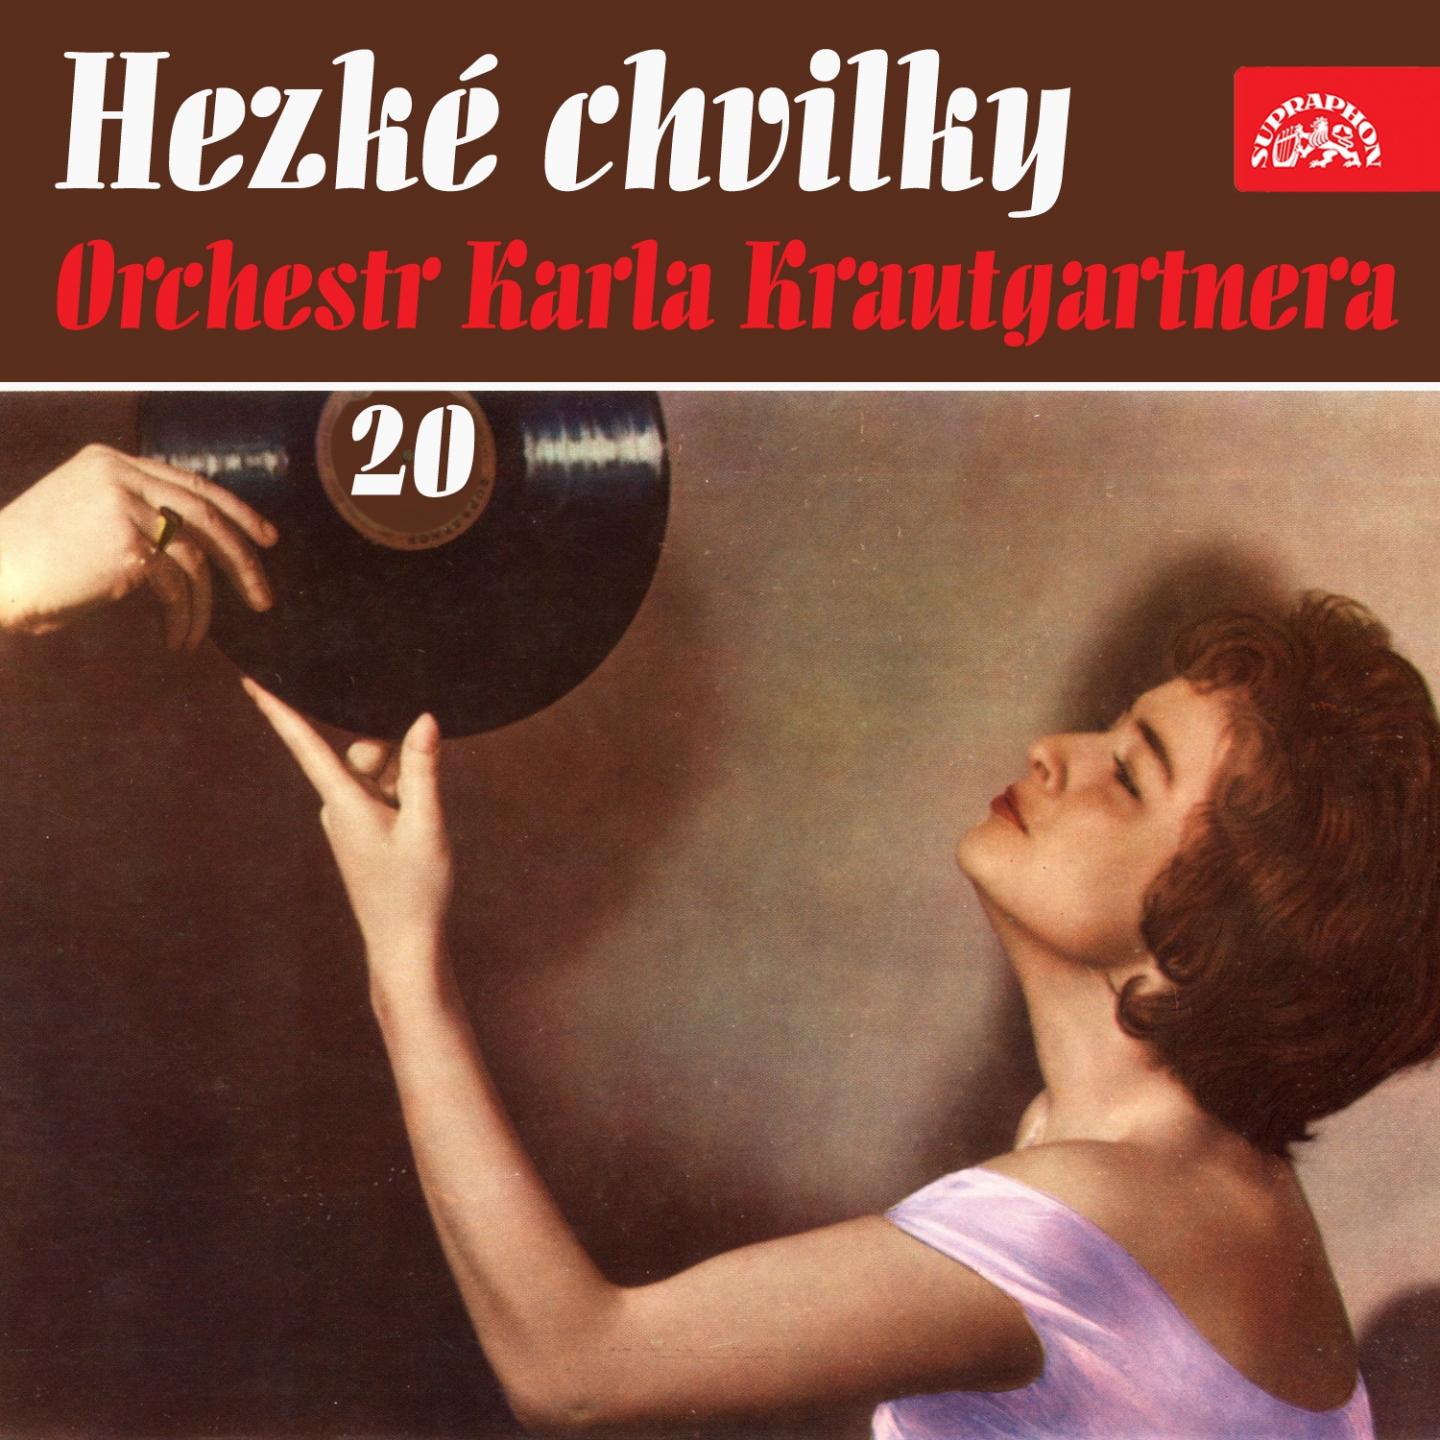 Hezke Chvilky Orchestr Karla Krautgartnera 20